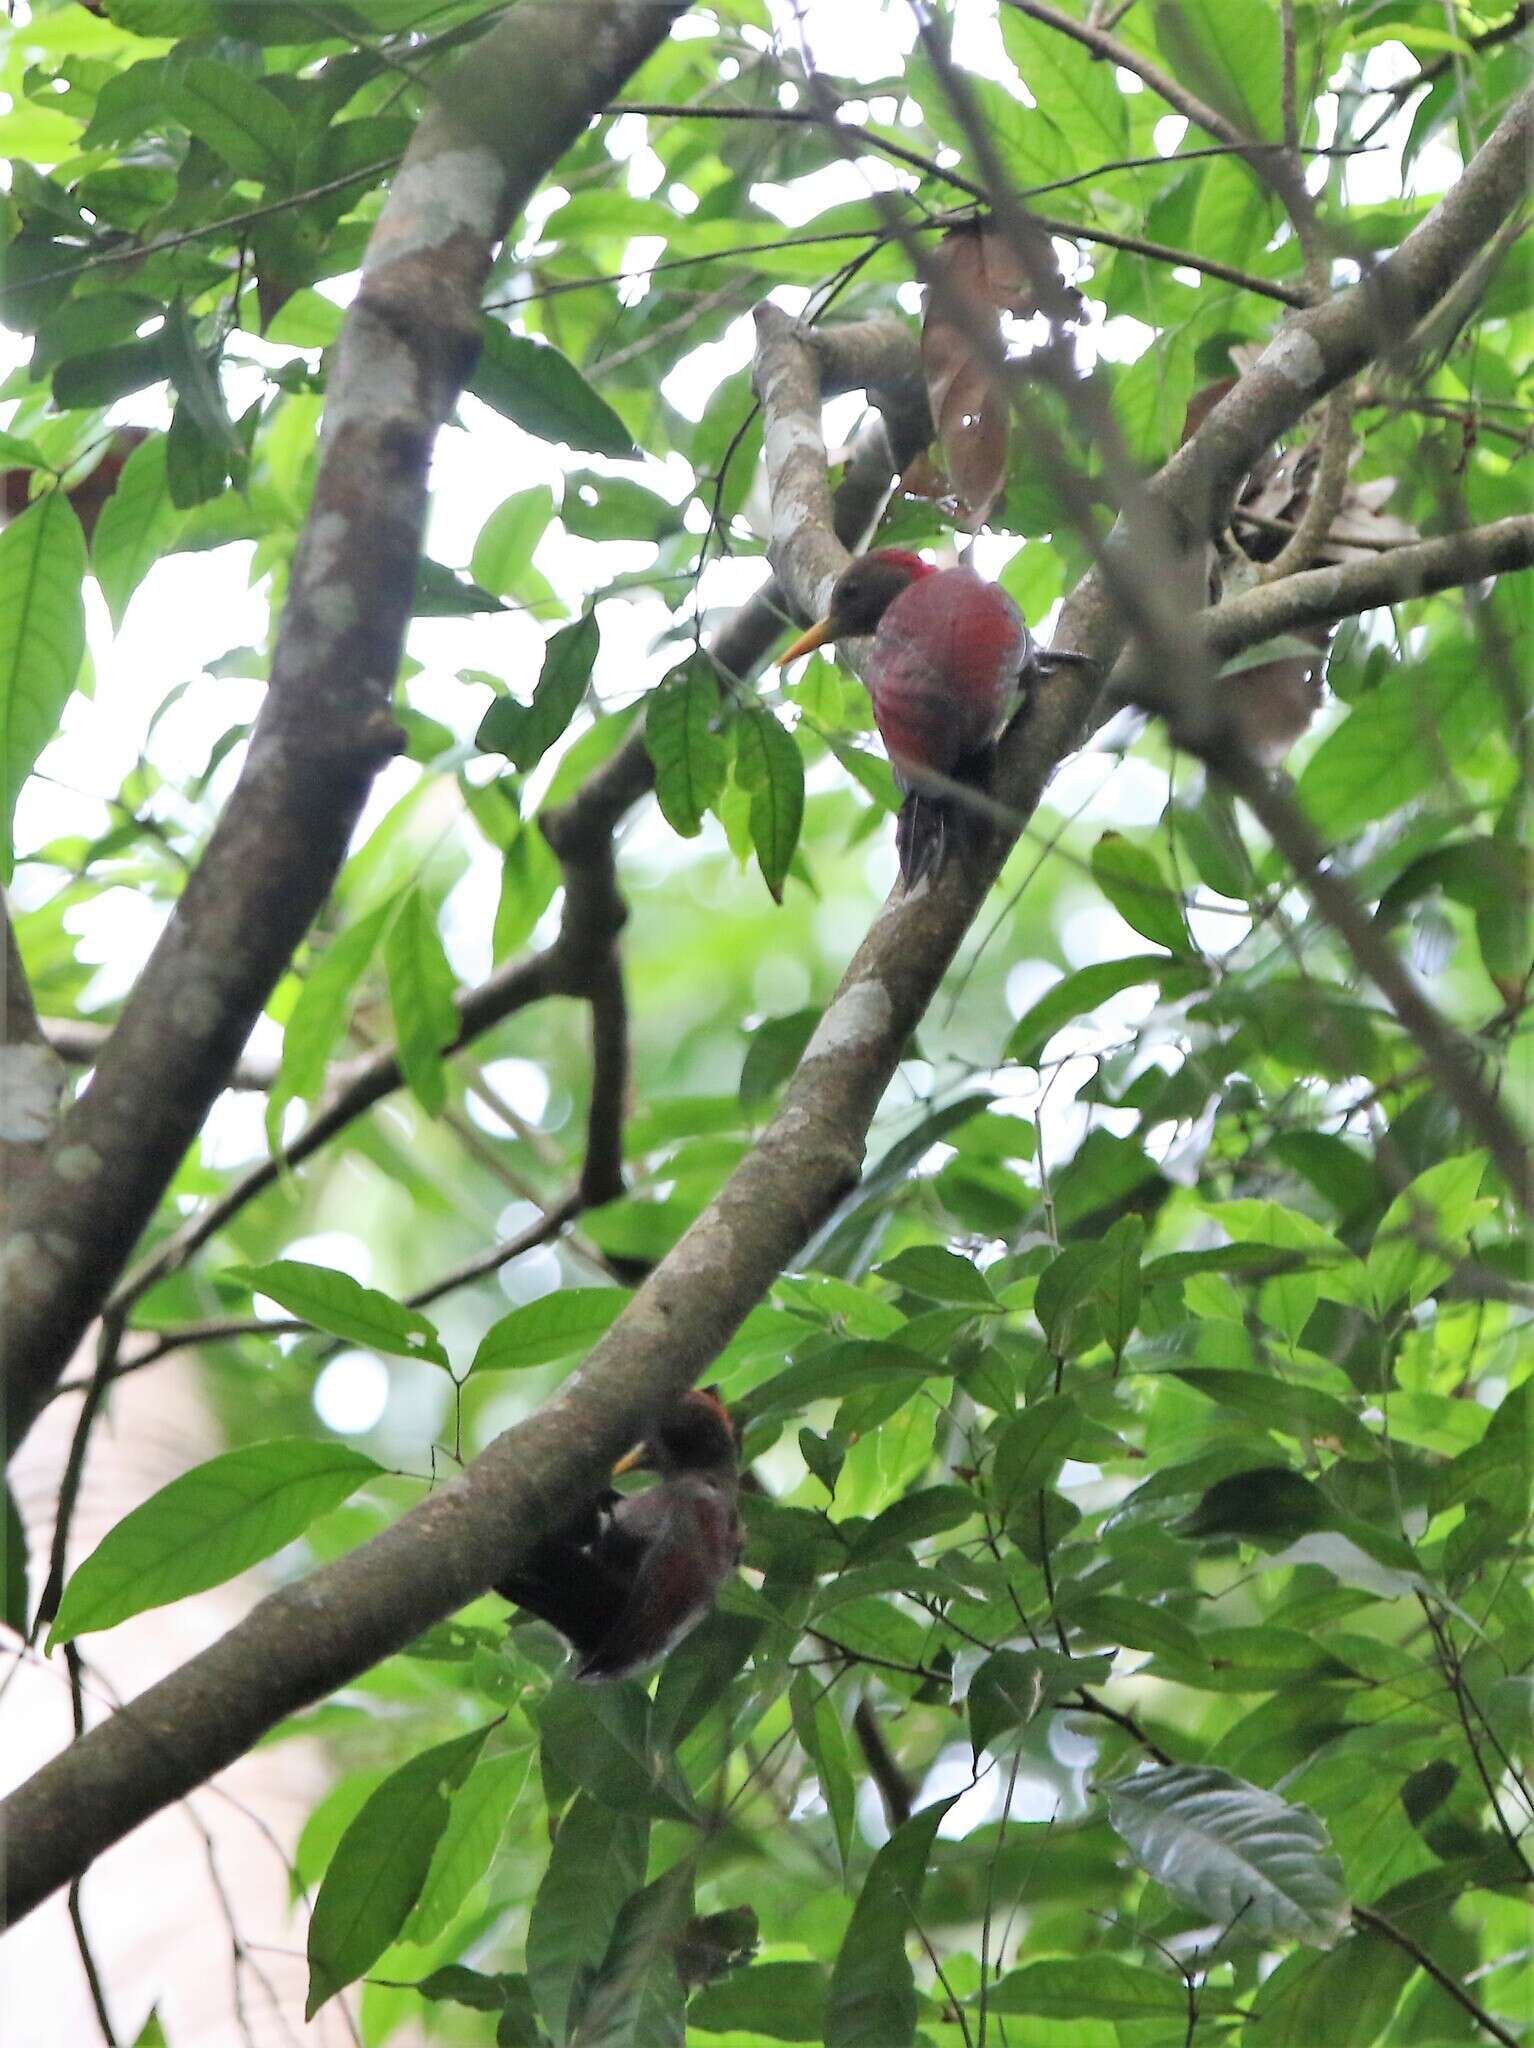 Image of Maroon Woodpecker